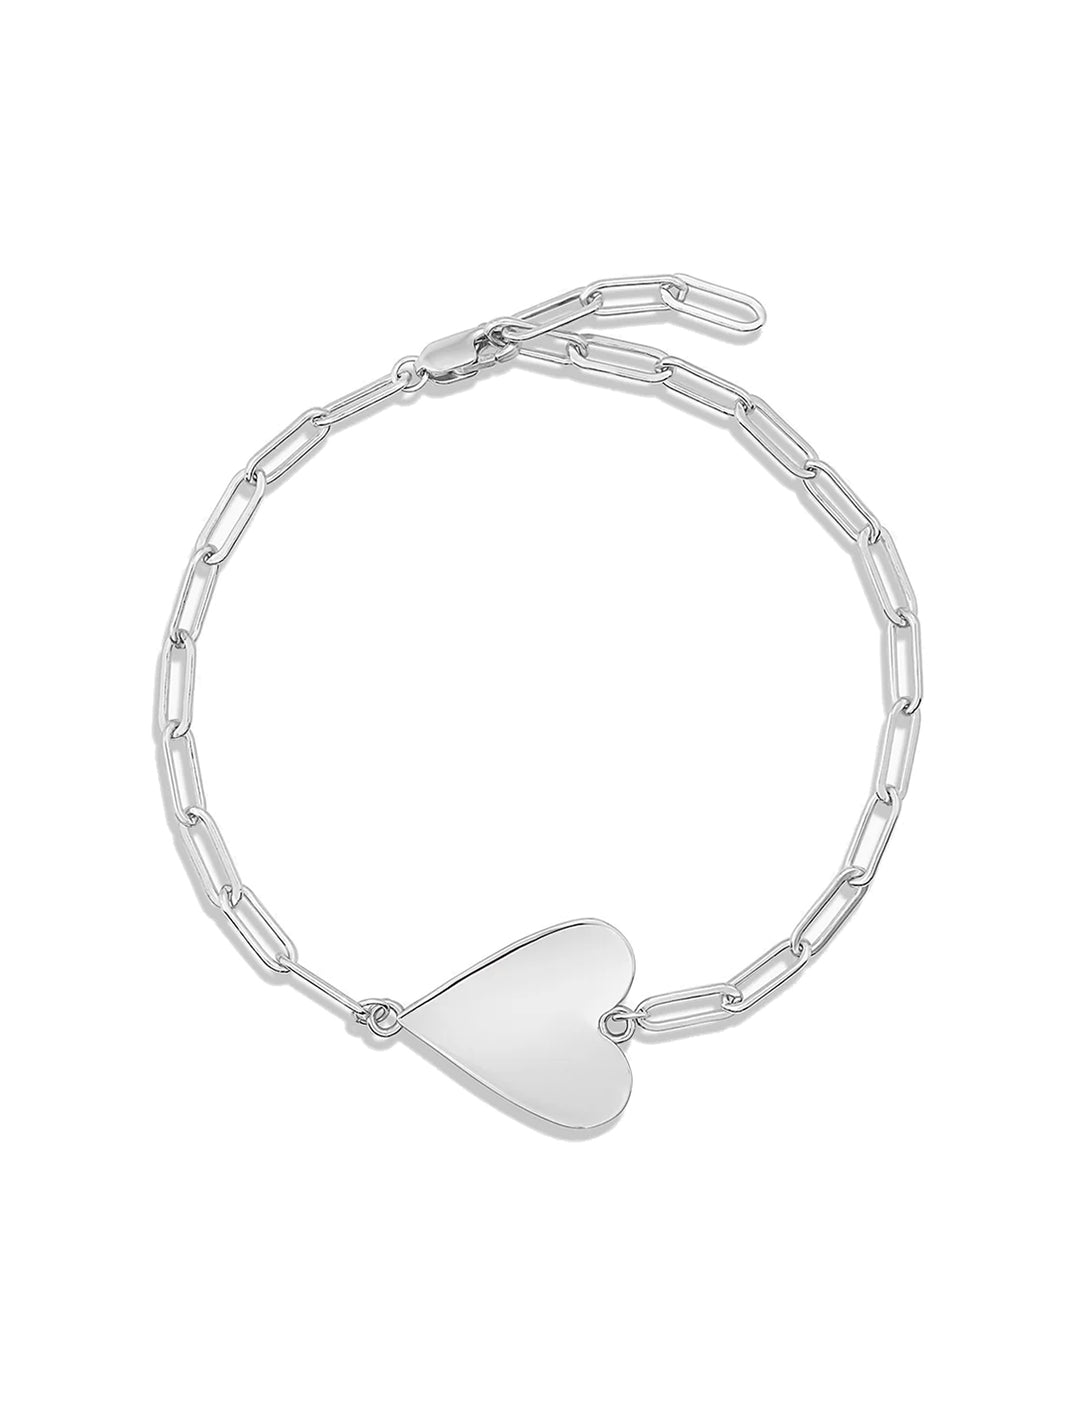 Overhead view of THATCH's amaya heart bracelet in silver.